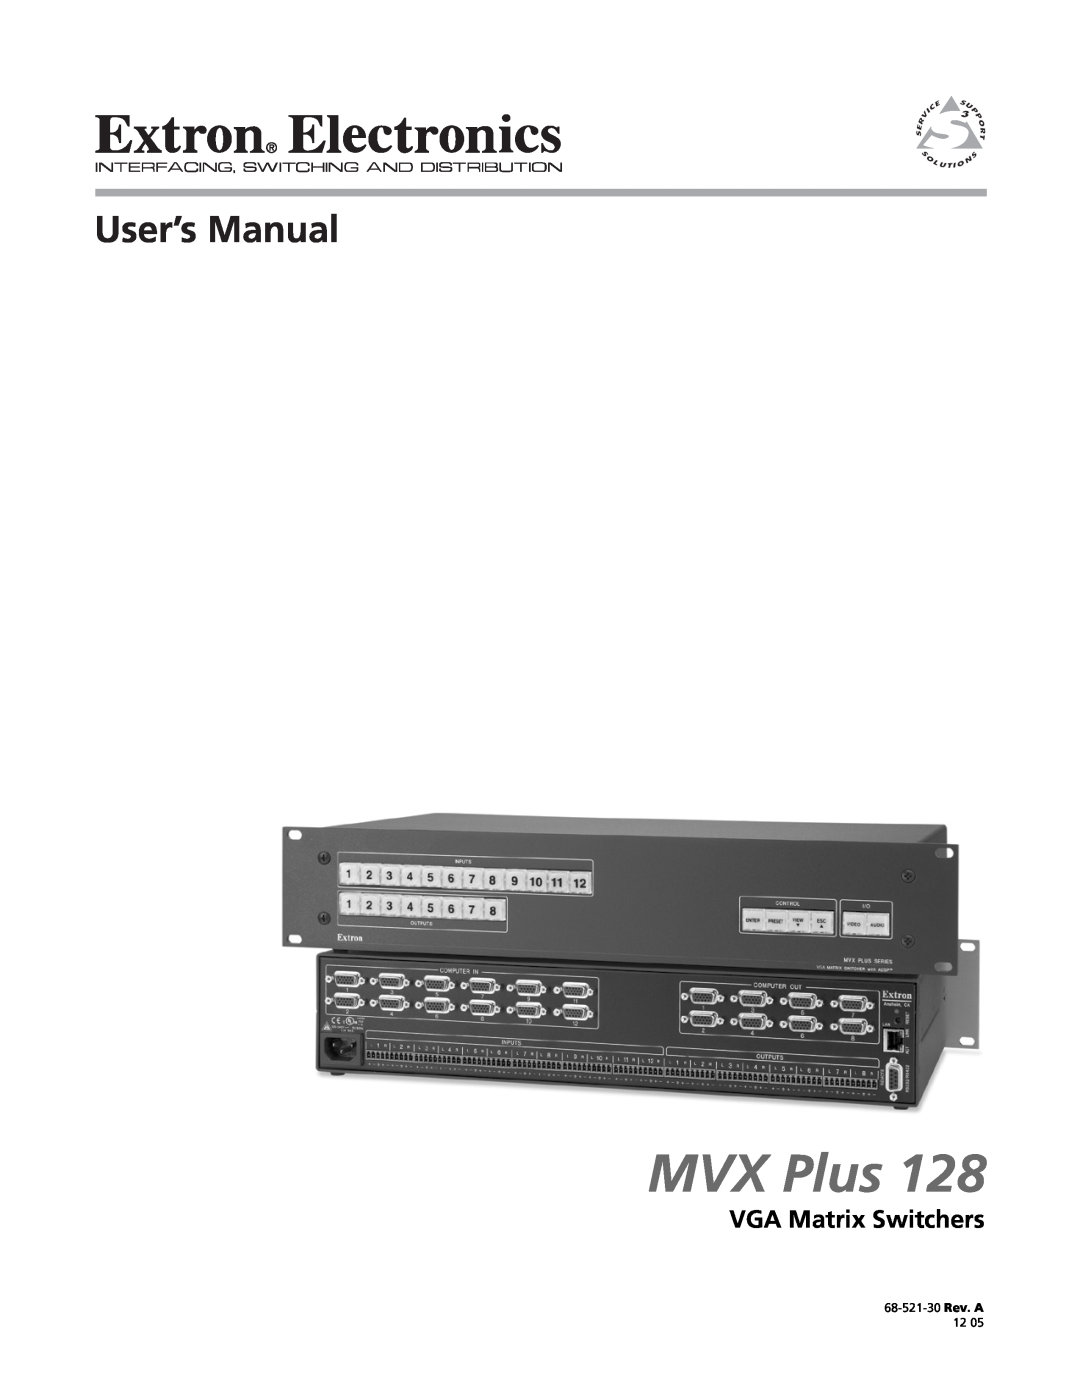 Extron electronic MVX PLUS 128 manual VGA Matrix Switchers, MVX Plus, 68-521-30 Rev. A 